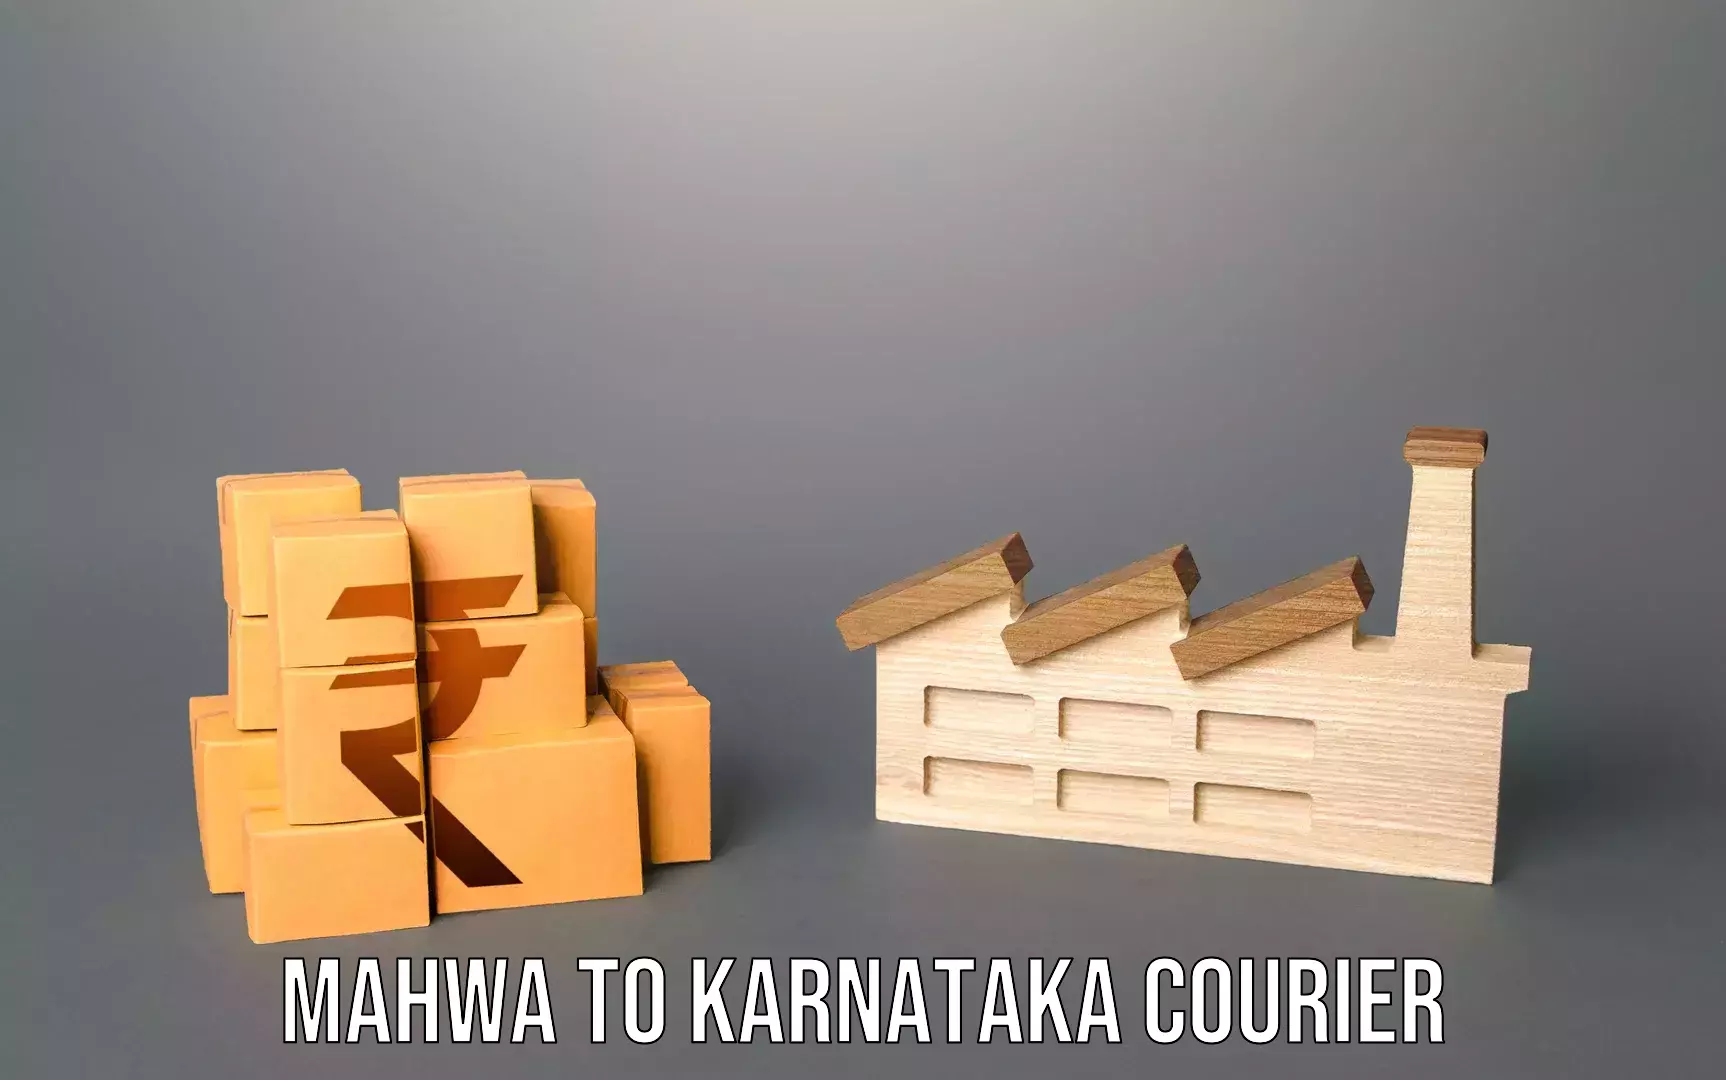 Door-to-door baggage service Mahwa to Karnataka